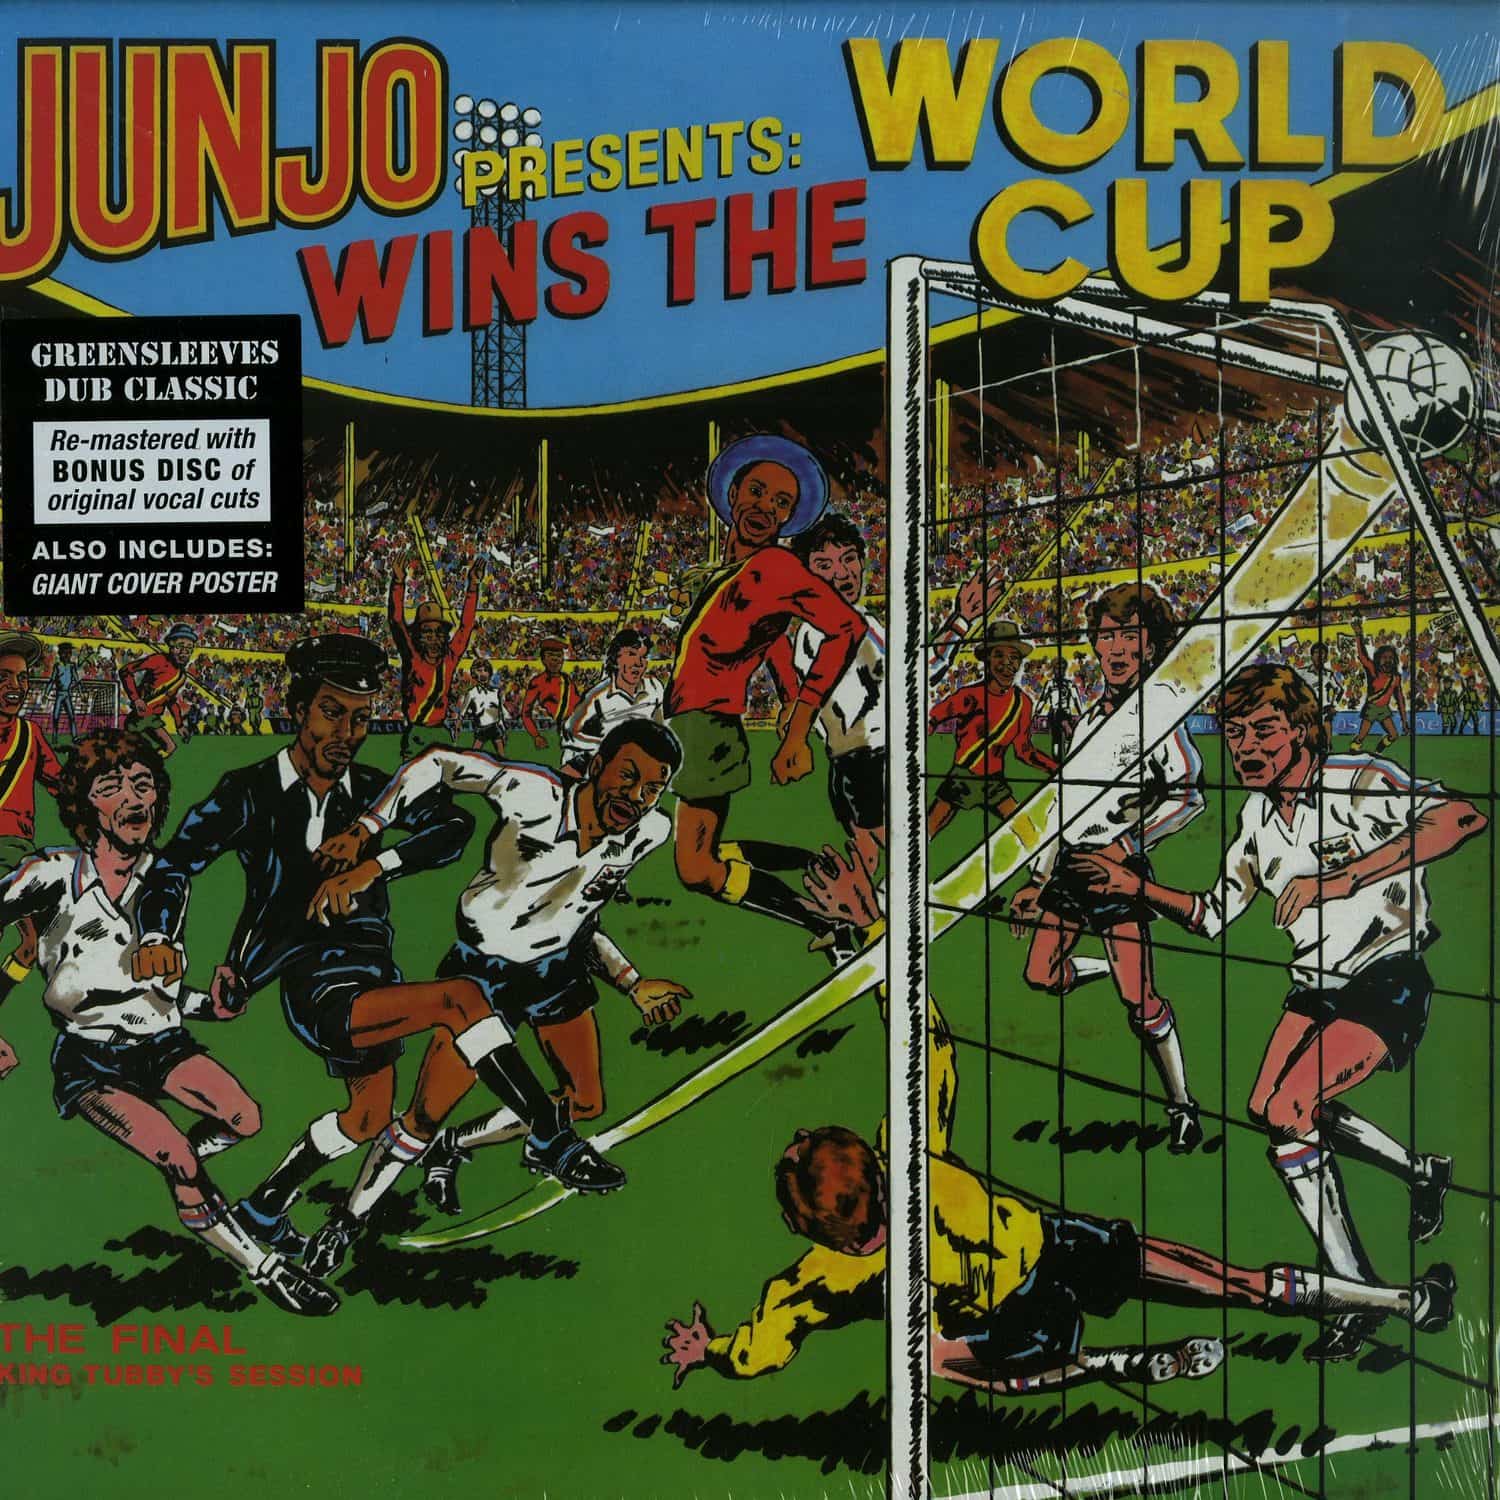 Henry Junjo Lawes - JUNJO PRESENTS: WINS THE WORLD CUP 